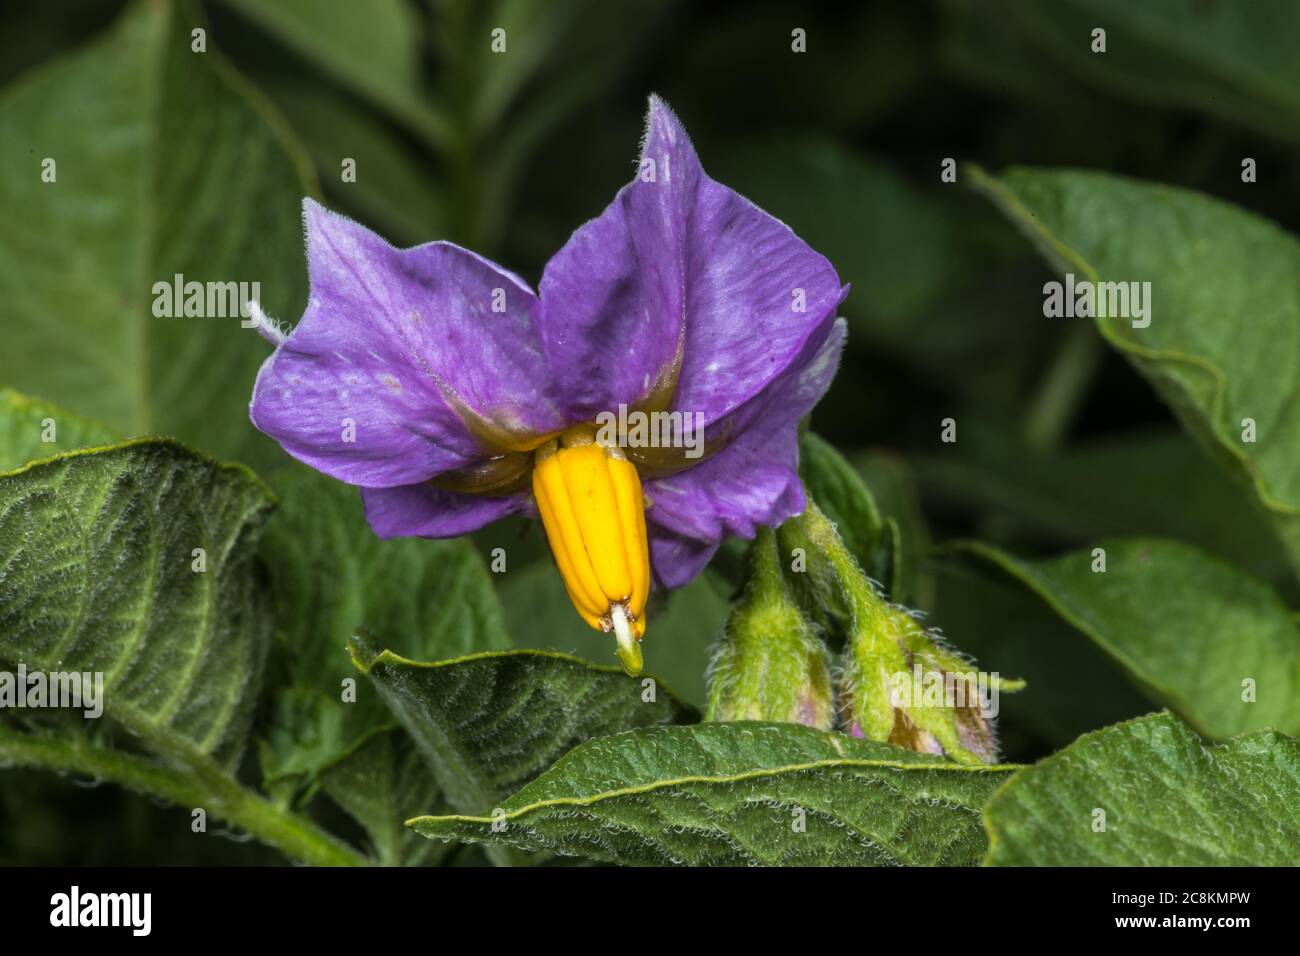 Flower of La Ratte Potato (Solanum tuberosum) Stock Photo